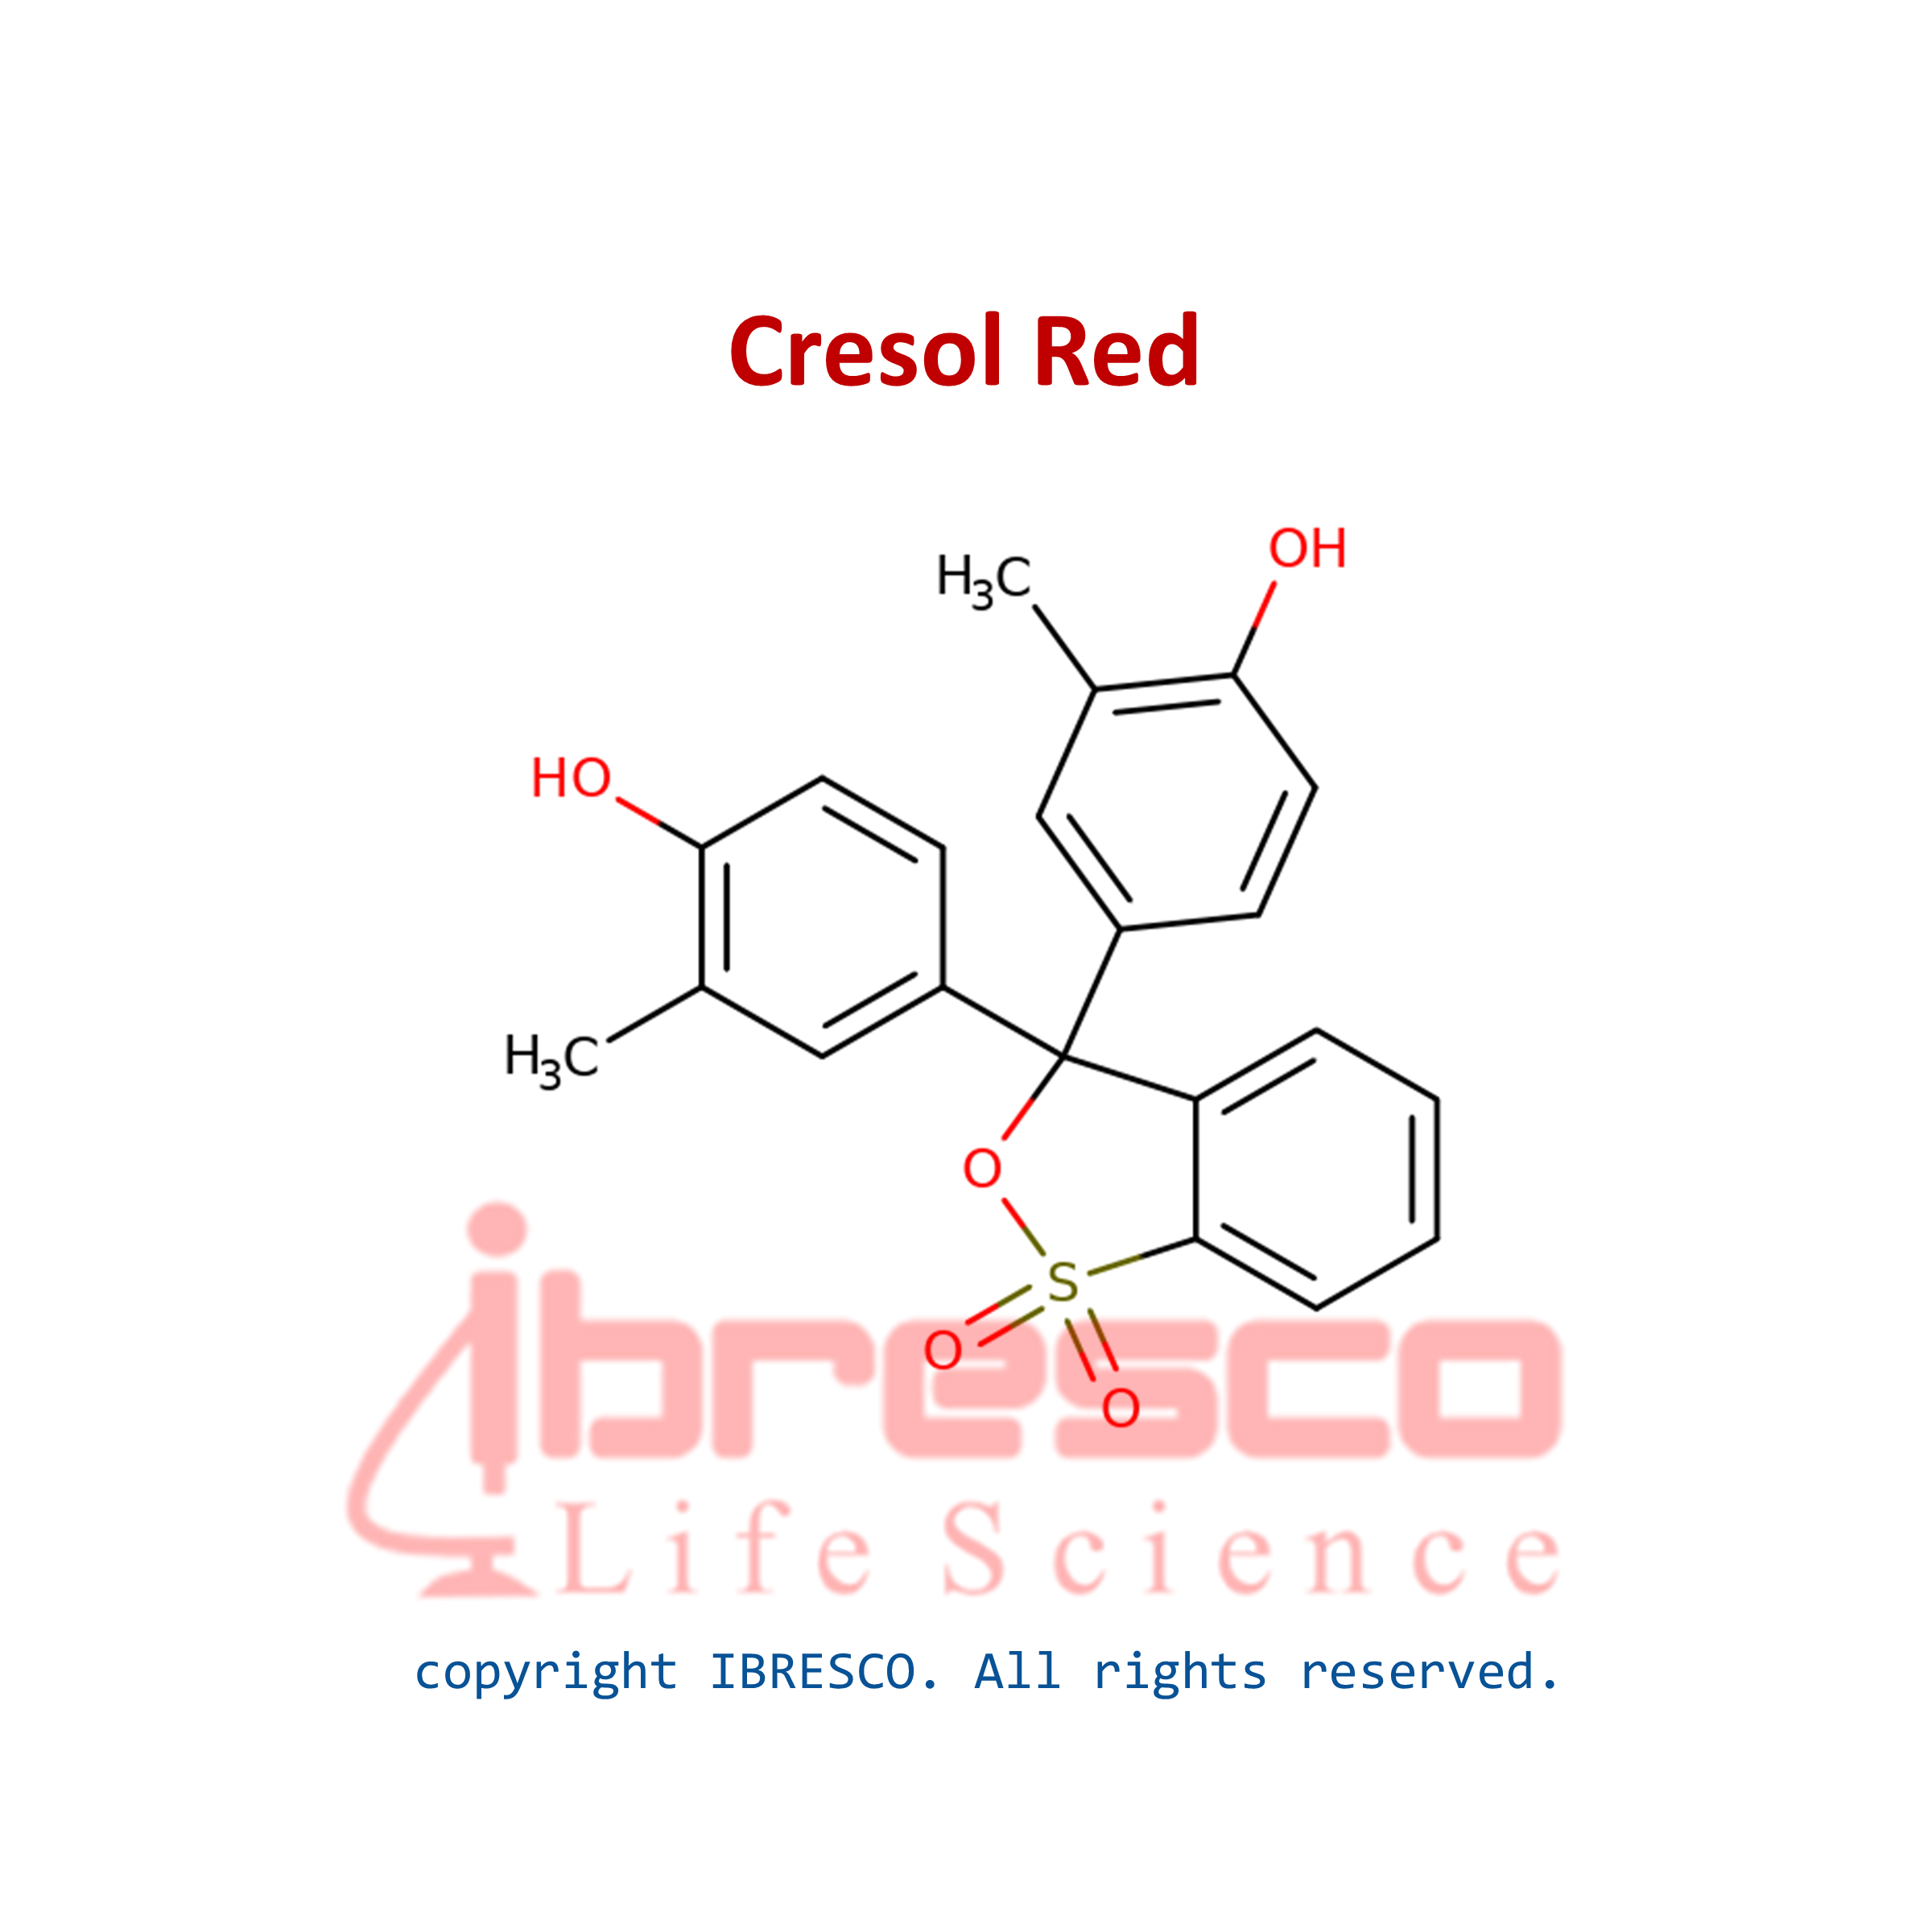 Cresol Red